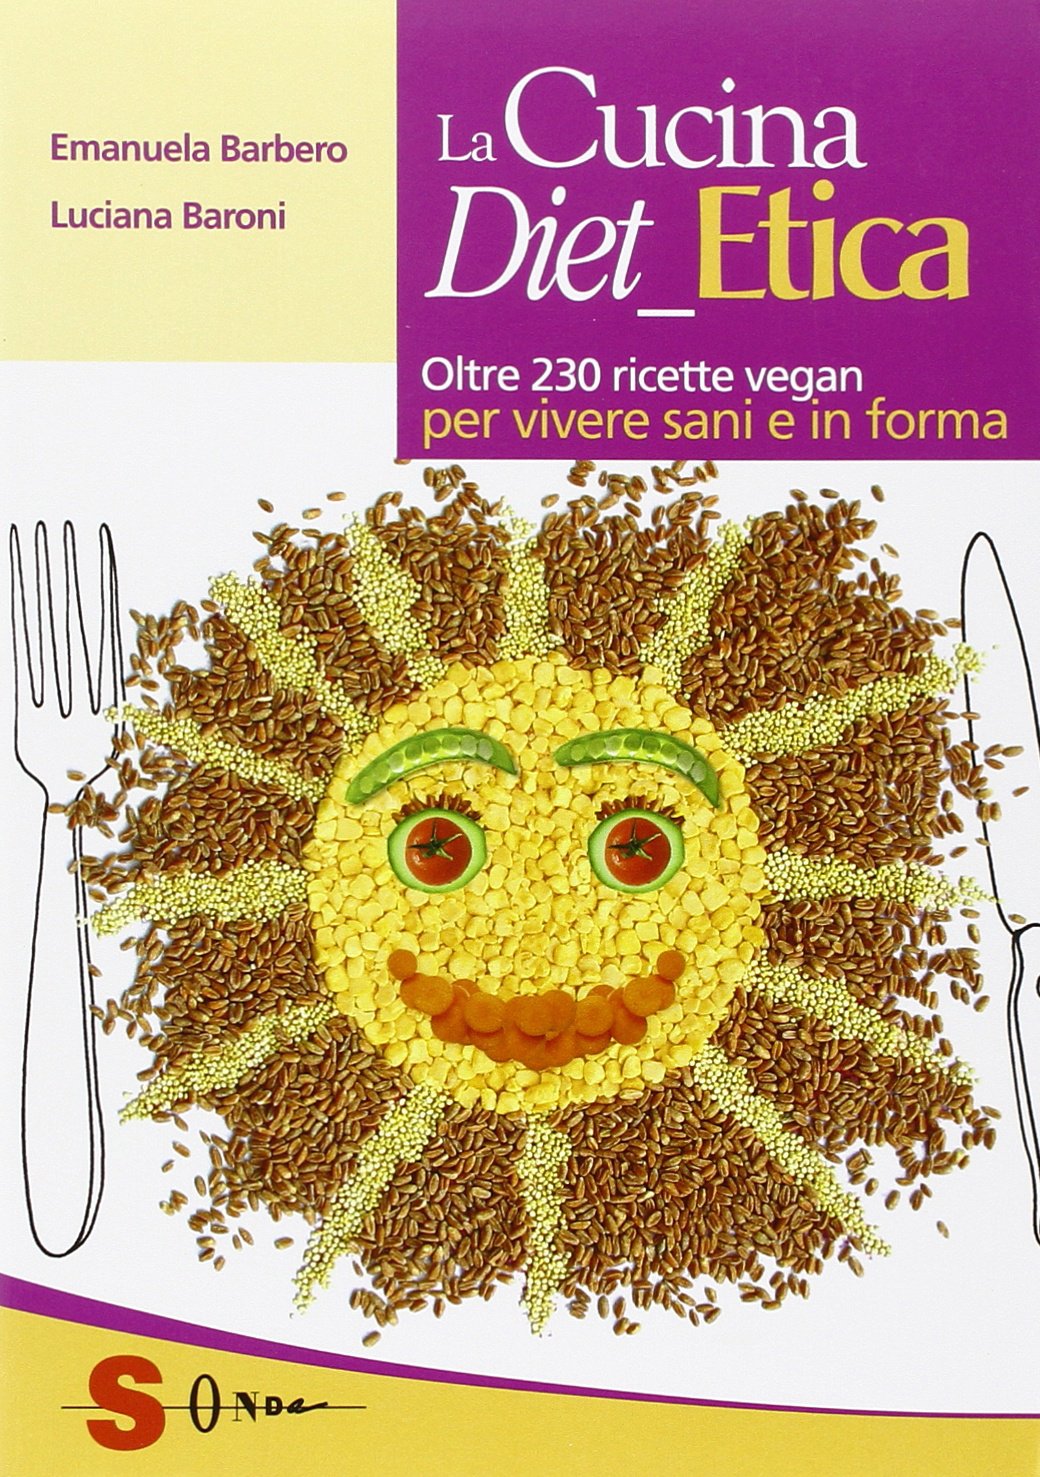 La Cucina Diet_etica - Emanuela Barbero, Luciana Baroni